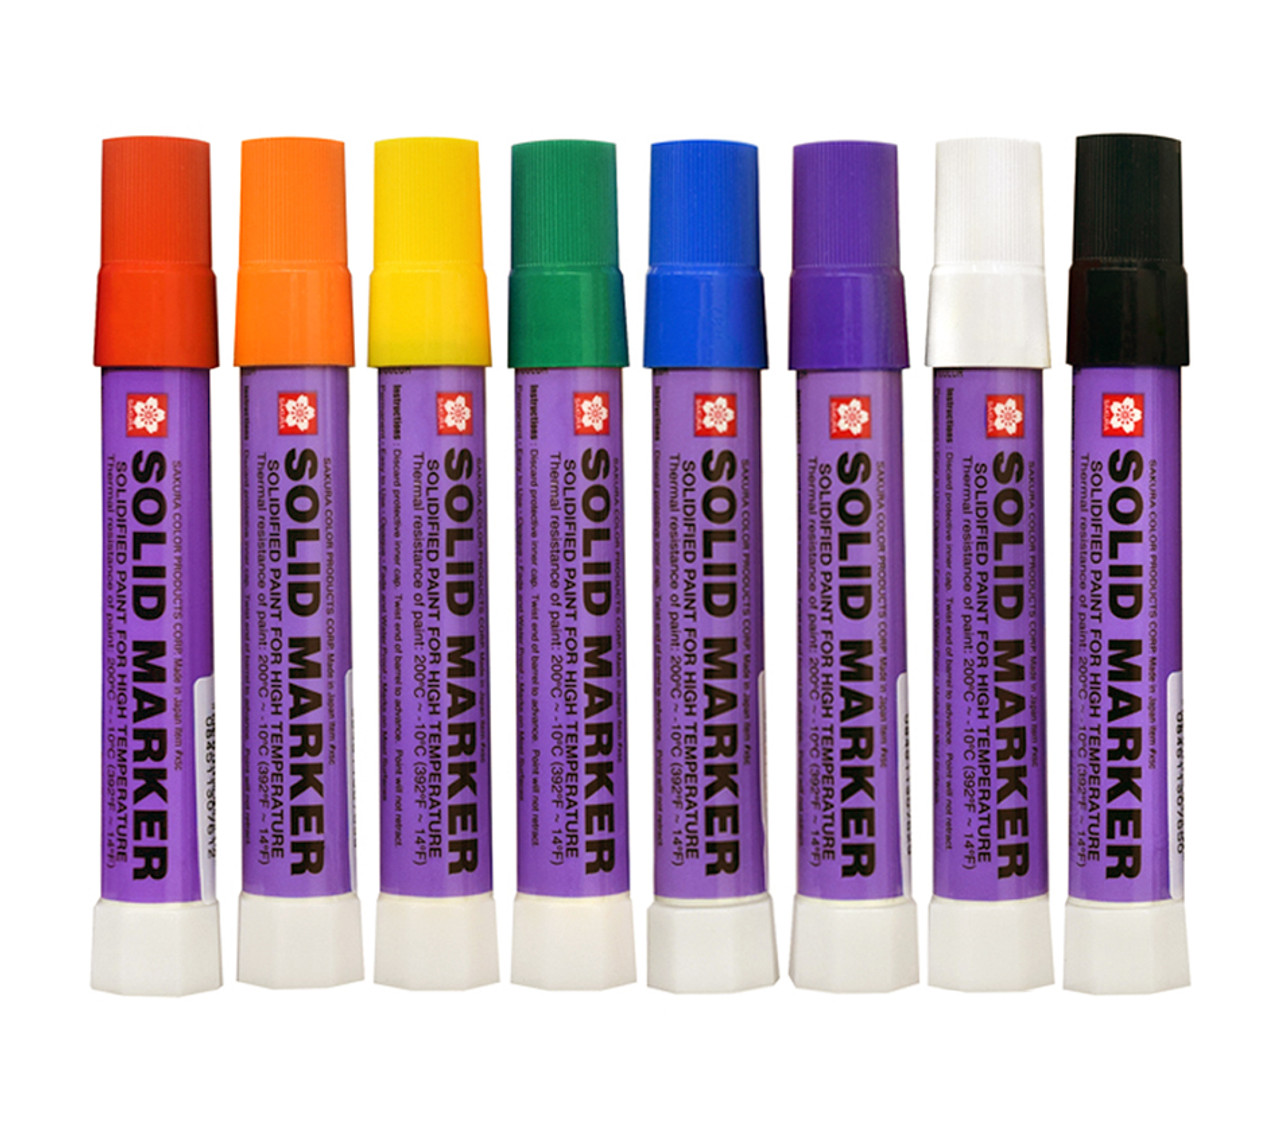  SAKURA Solid Glow-In-the-Dark Paint Markers - Permanent Marker  Paint Pens - Window, Wood, & Glass Marker - Glow In the Dark Paint - 1 Pack  : Arts, Crafts & Sewing